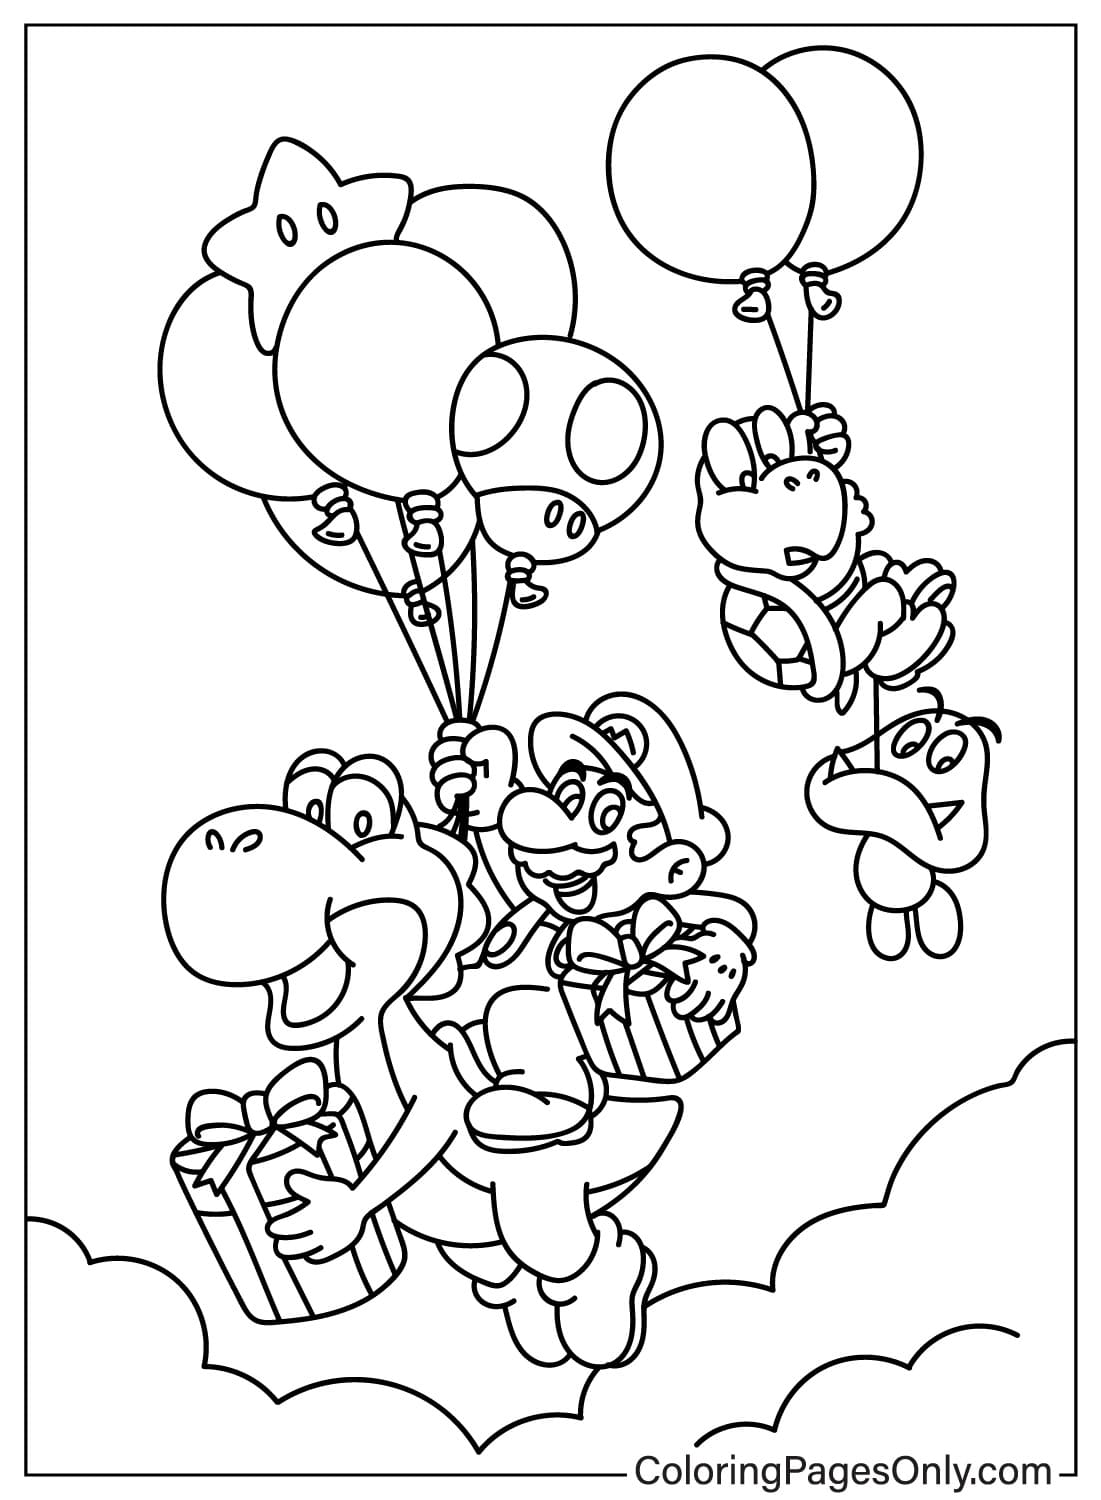 Mario, Yoshi, Koopa Troopa, Goomba Coloring Page